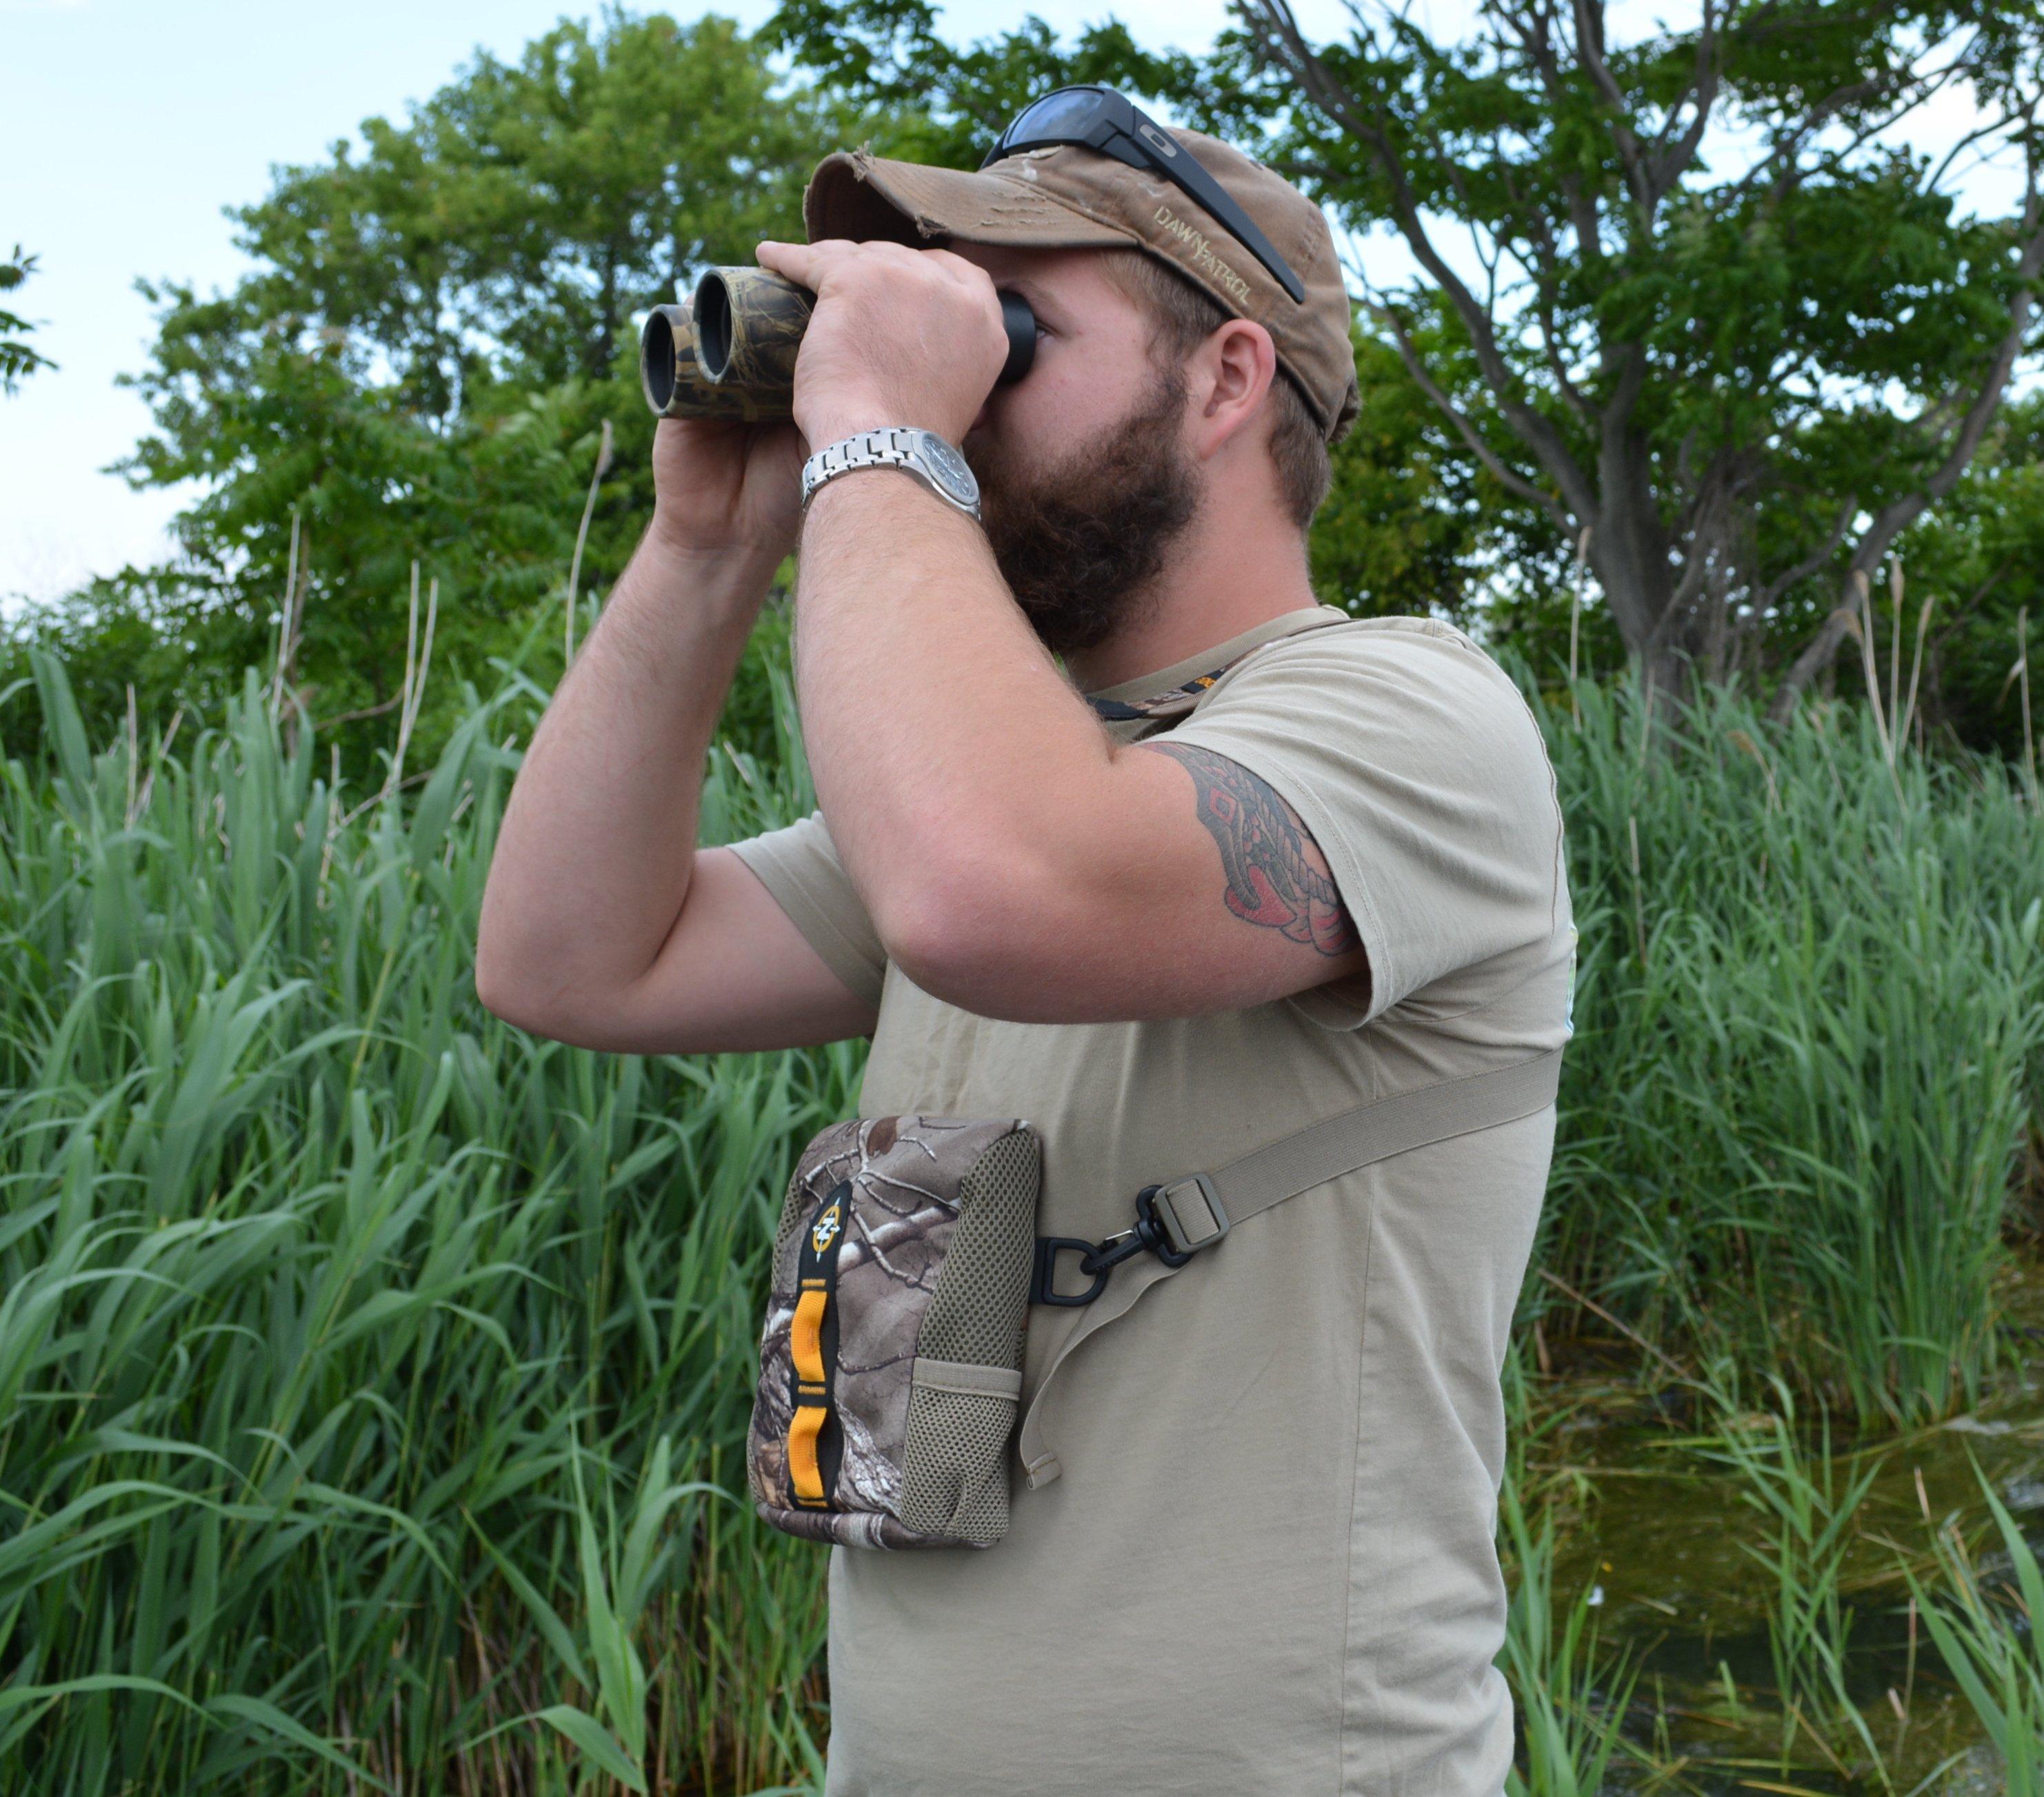 hunters uses binoculars